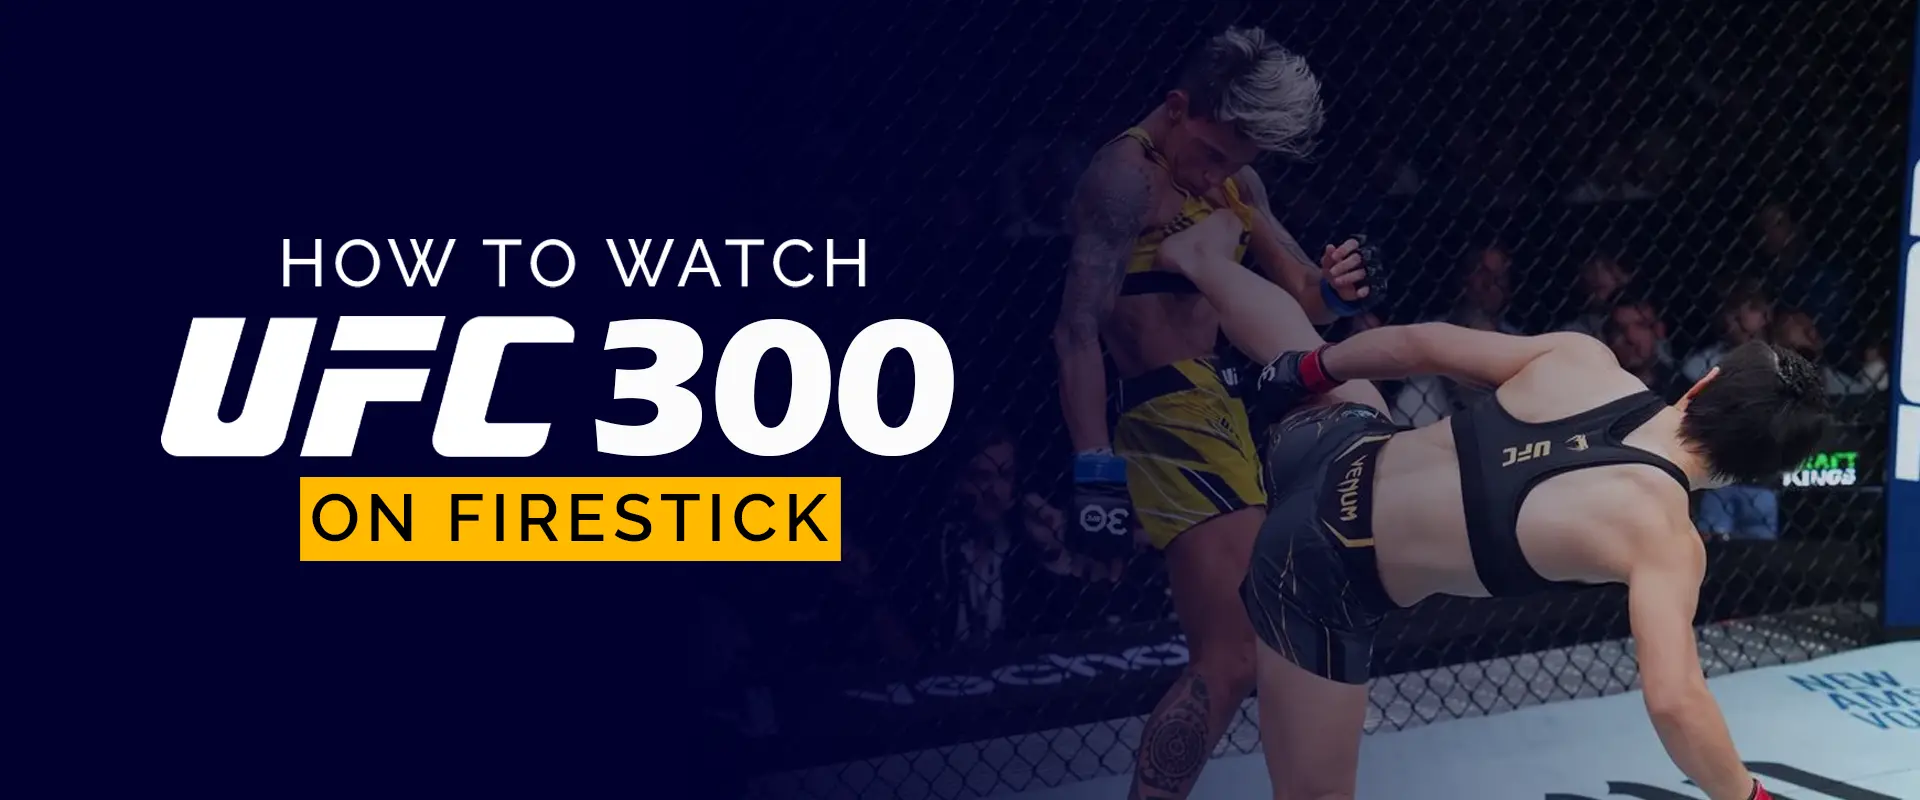 How to Watch UFC 300 on Firestick